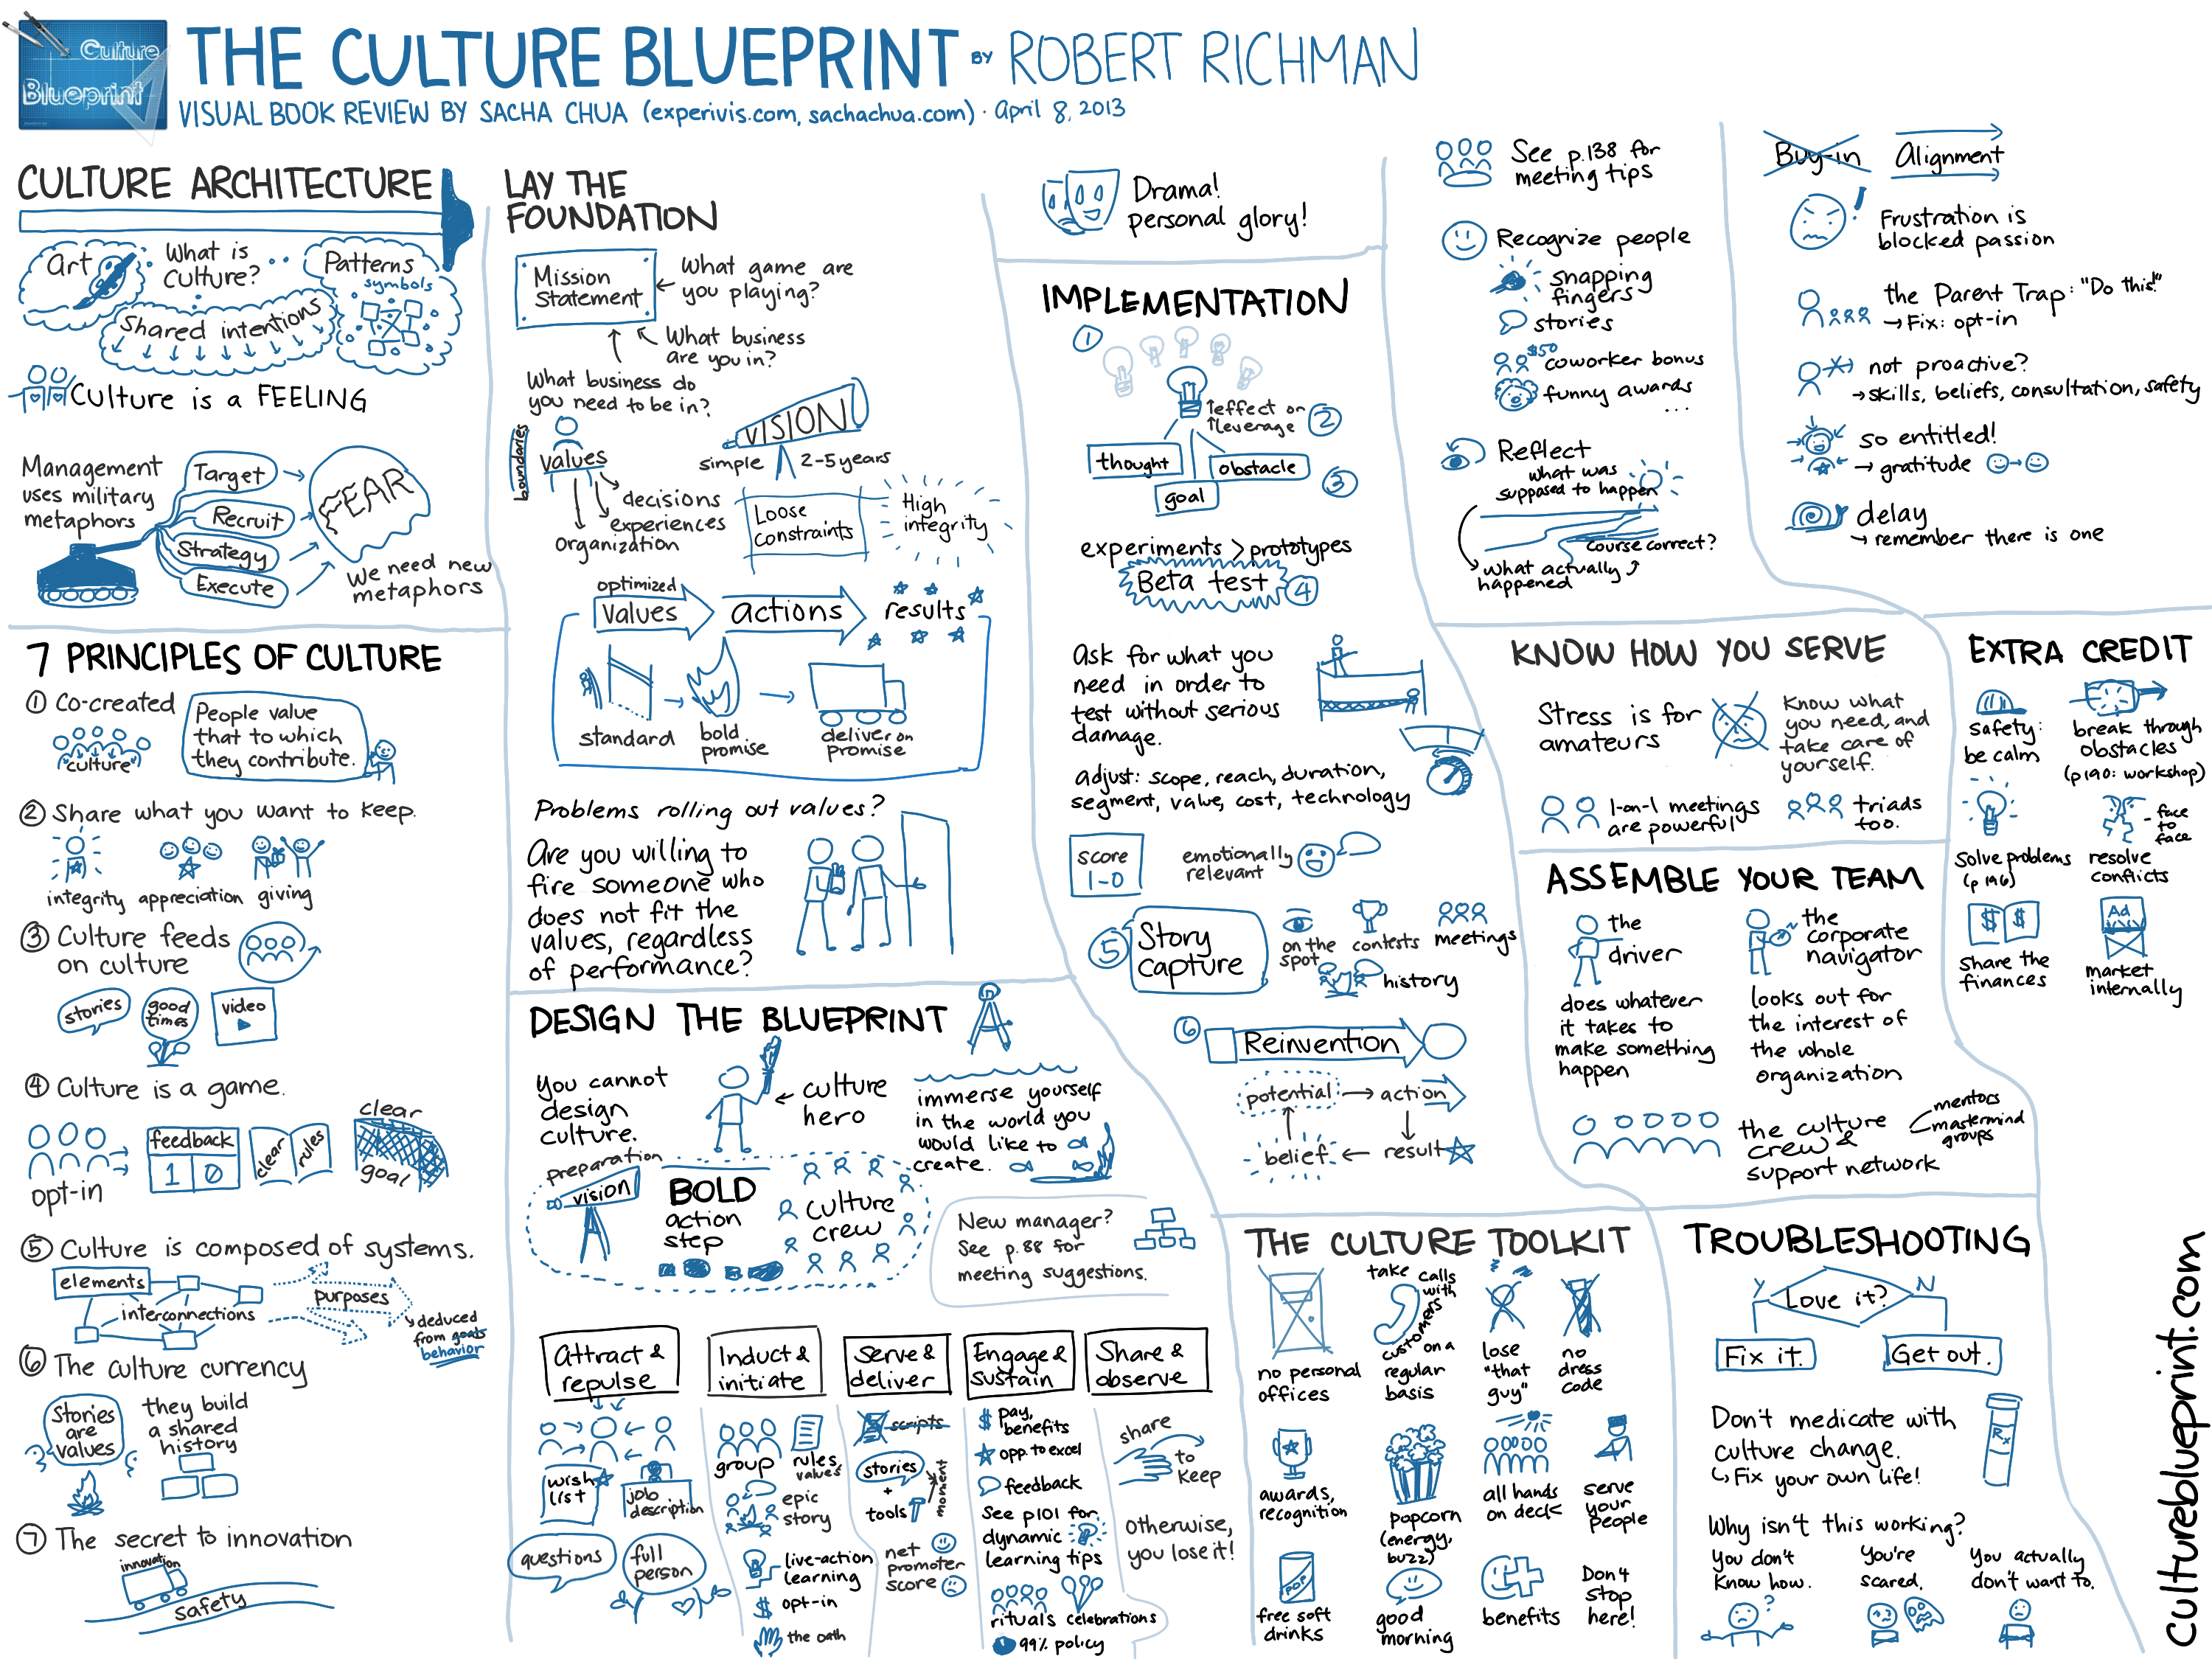 Visual book review: The Culture Blueprint (Robert Richman)